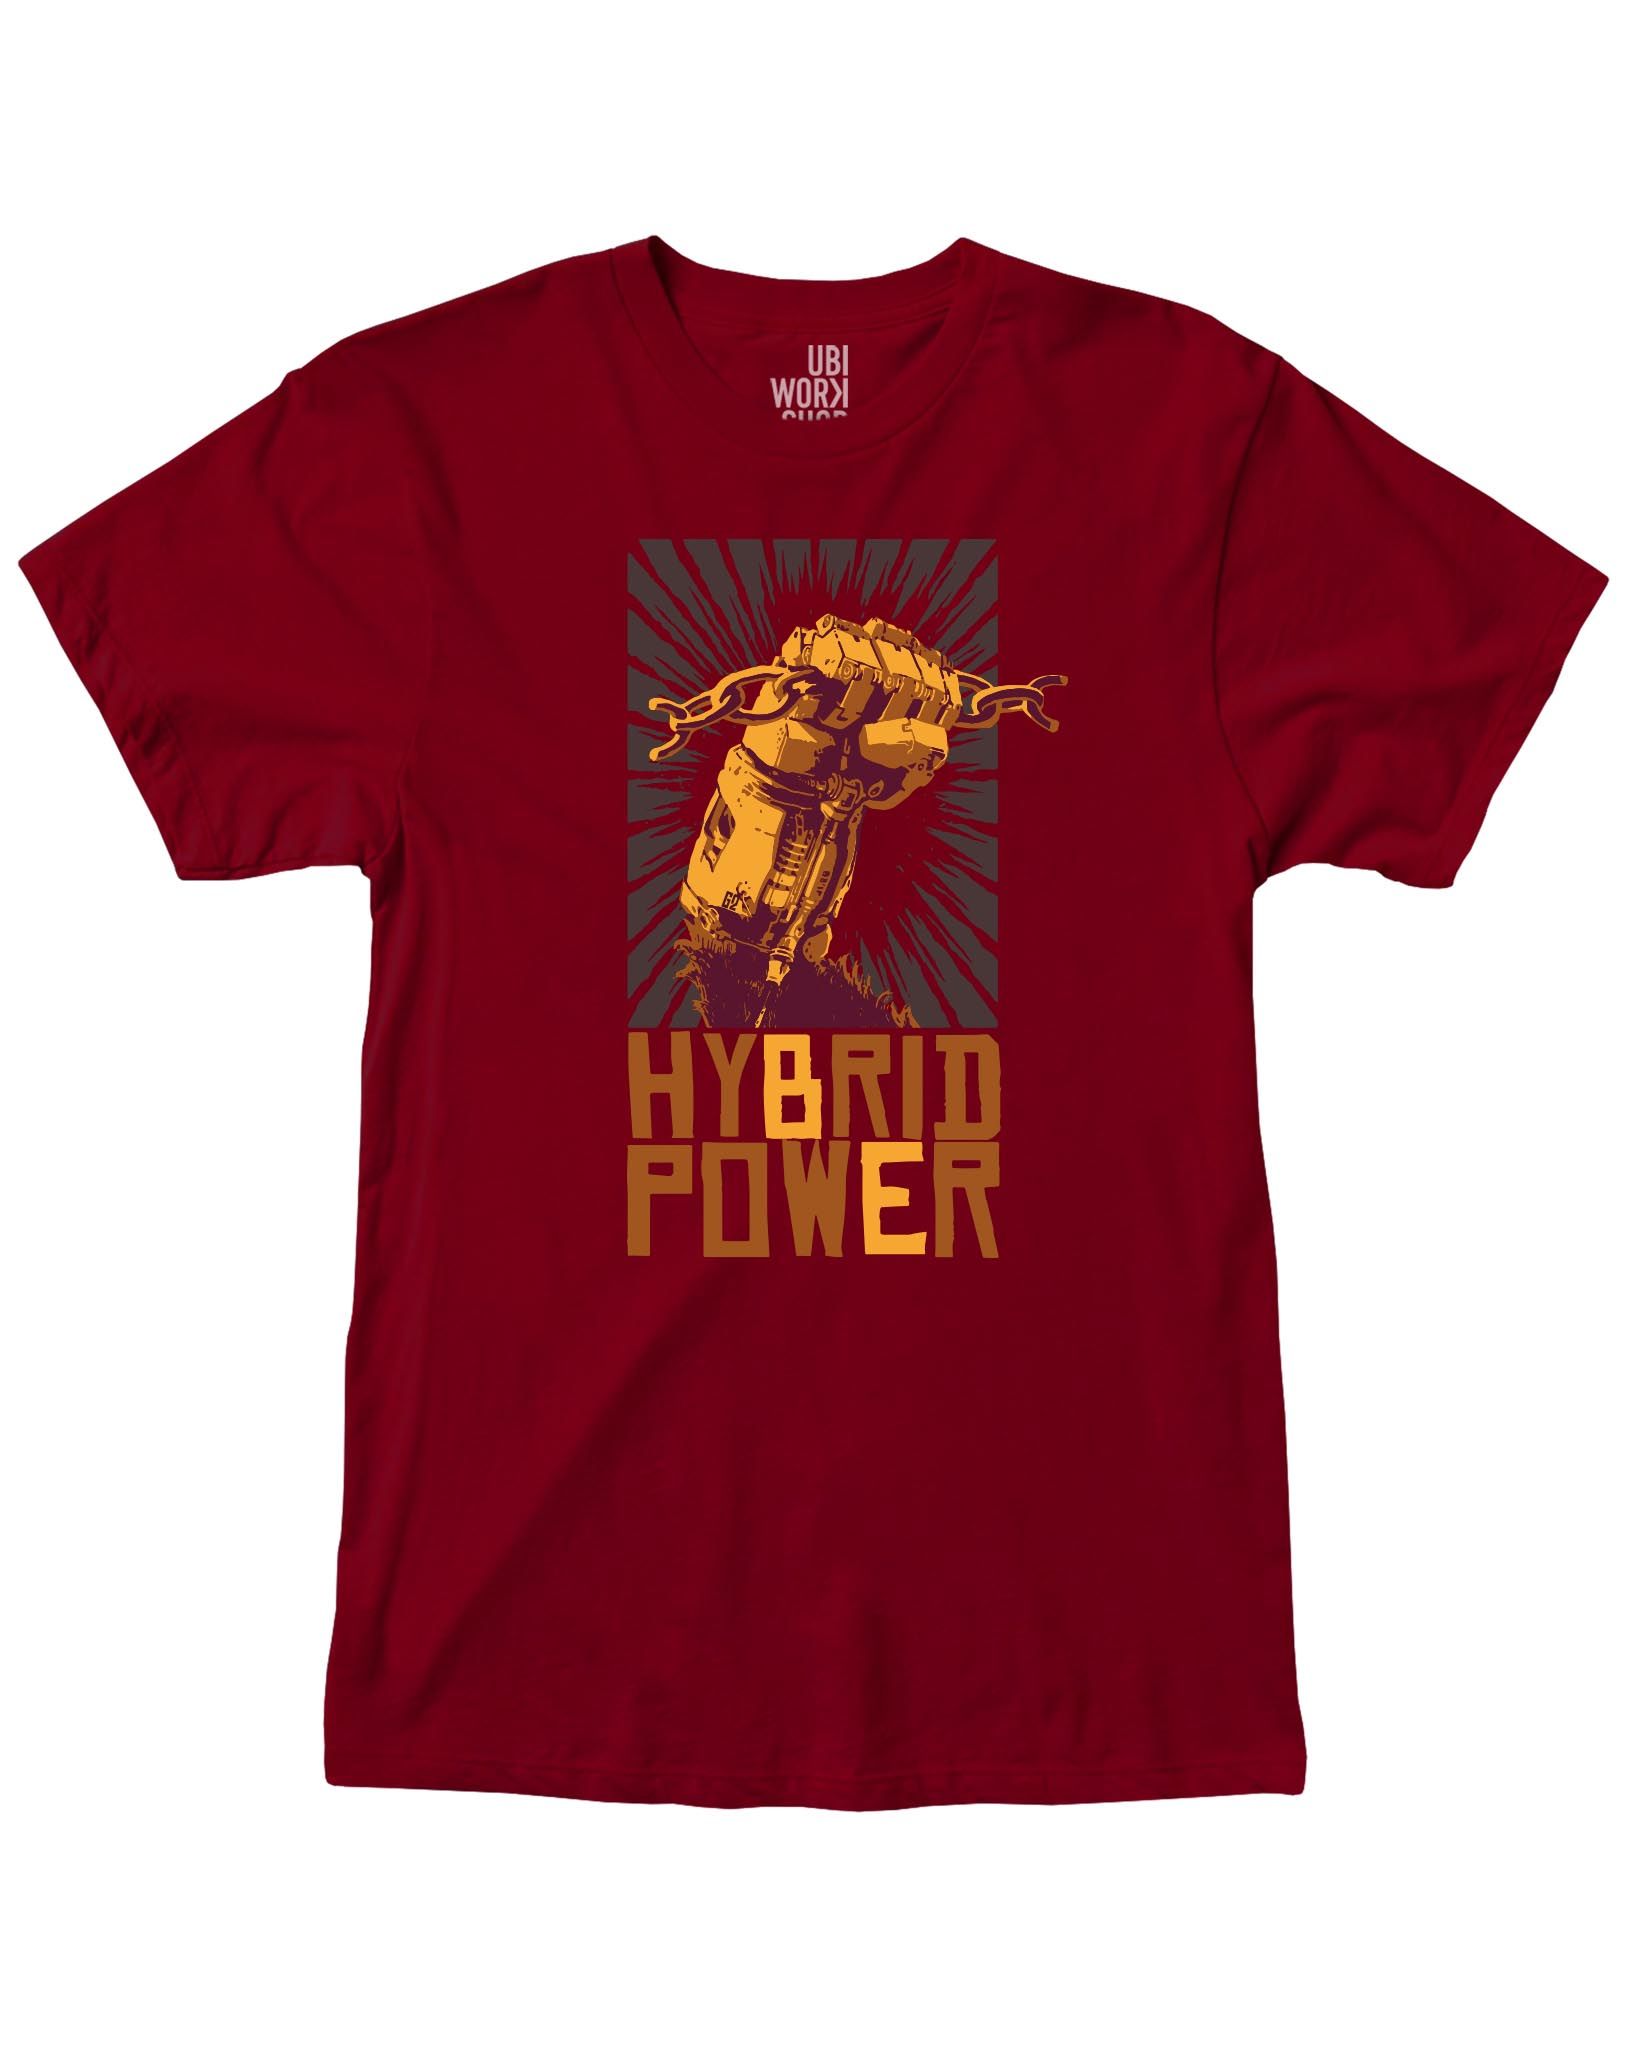 T-shirt "Hybrid power" !